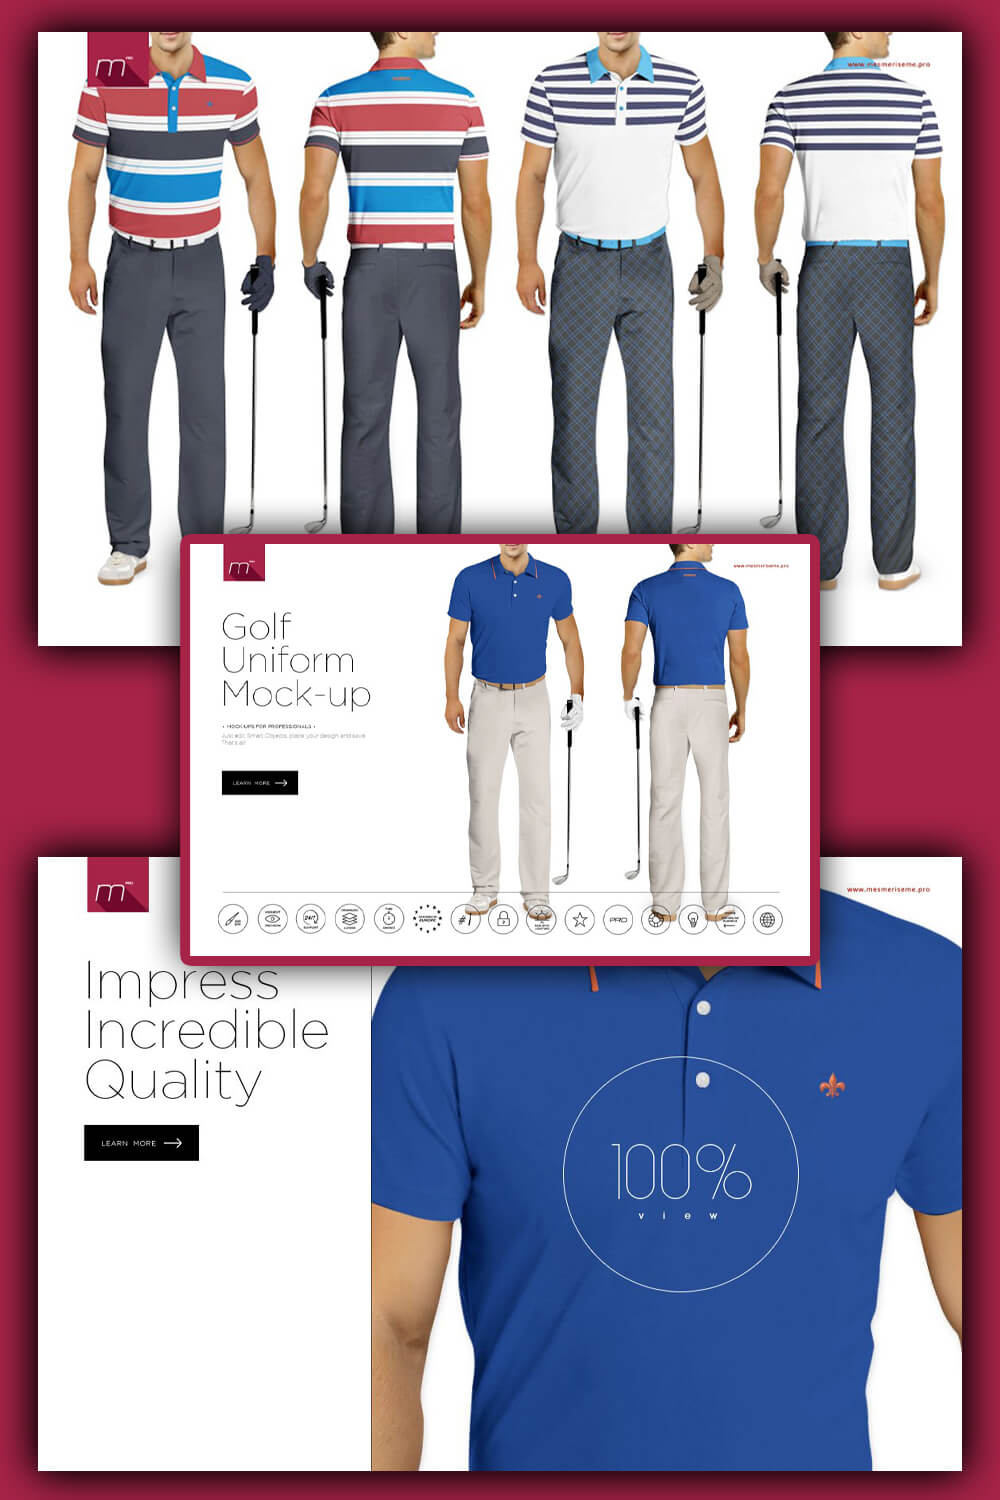 Golf uniform for a better game.